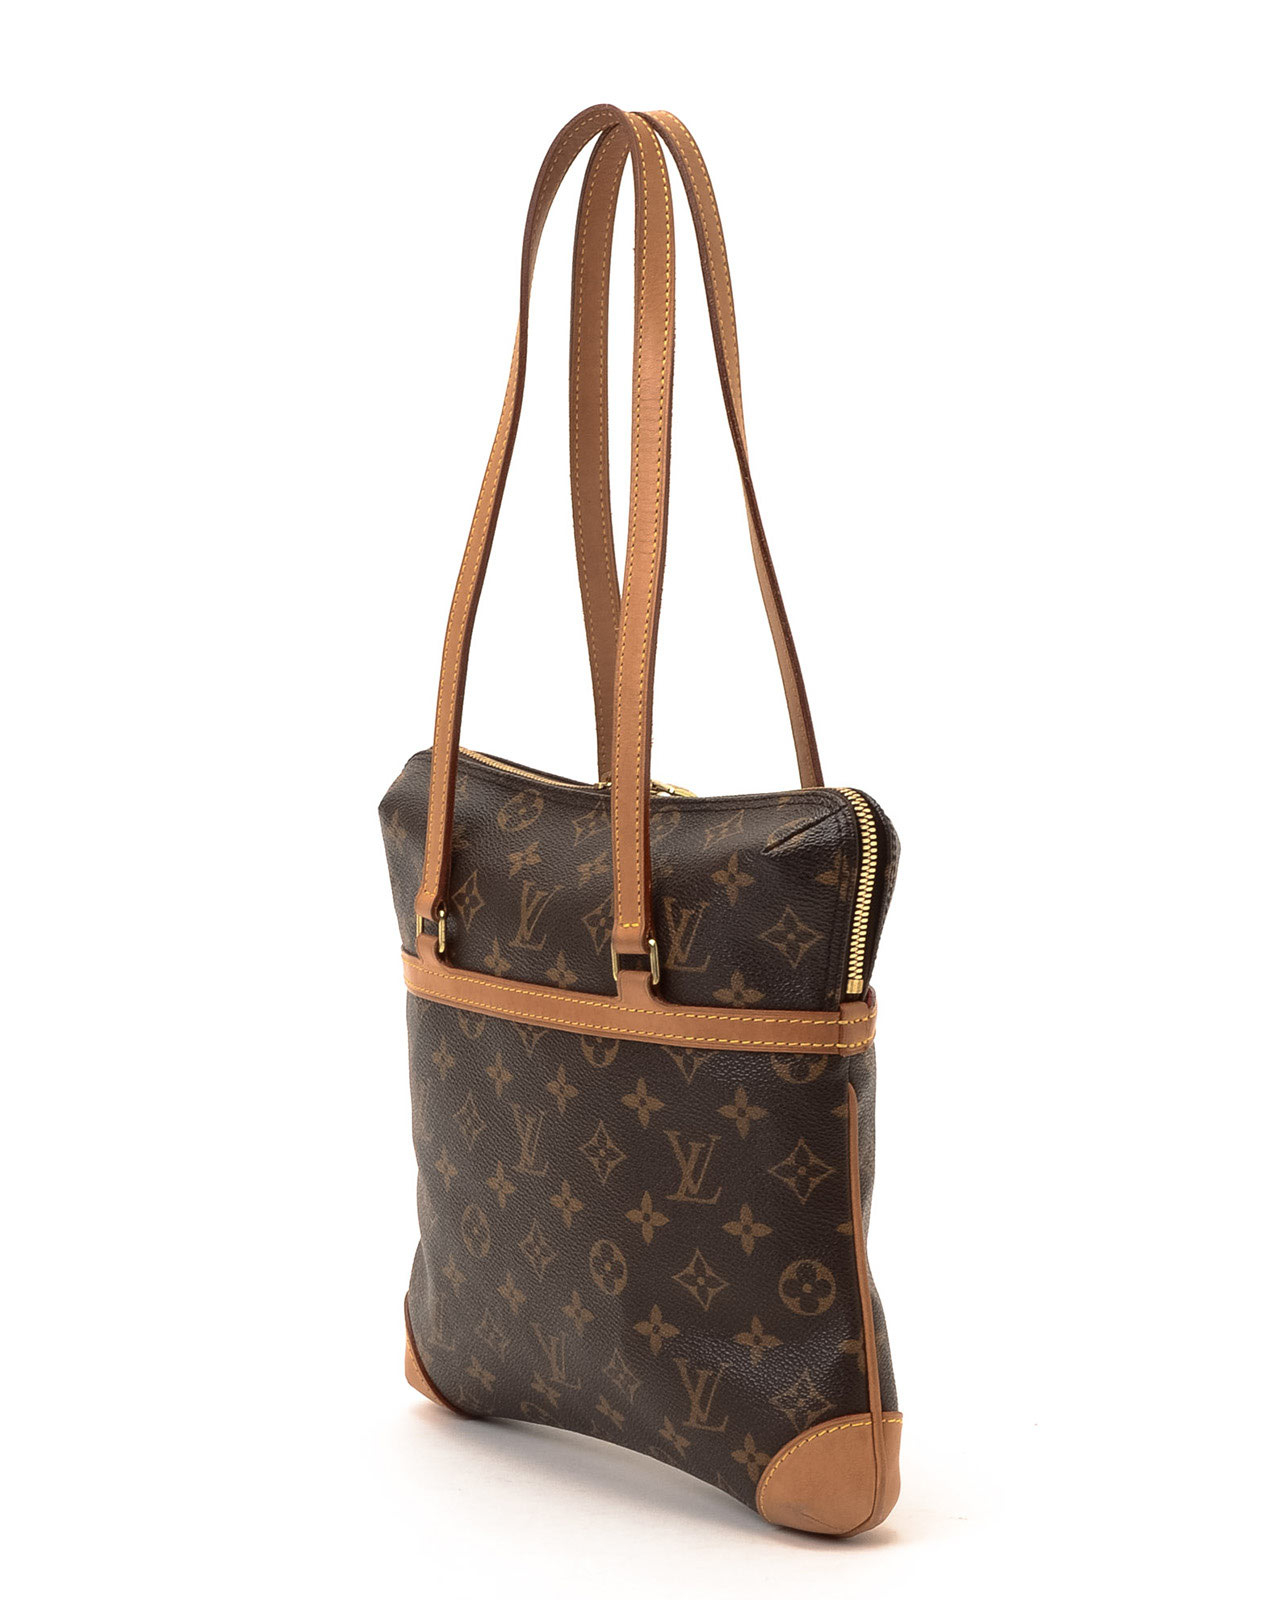 Lyst - Louis Vuitton Brown Handbag in Brown